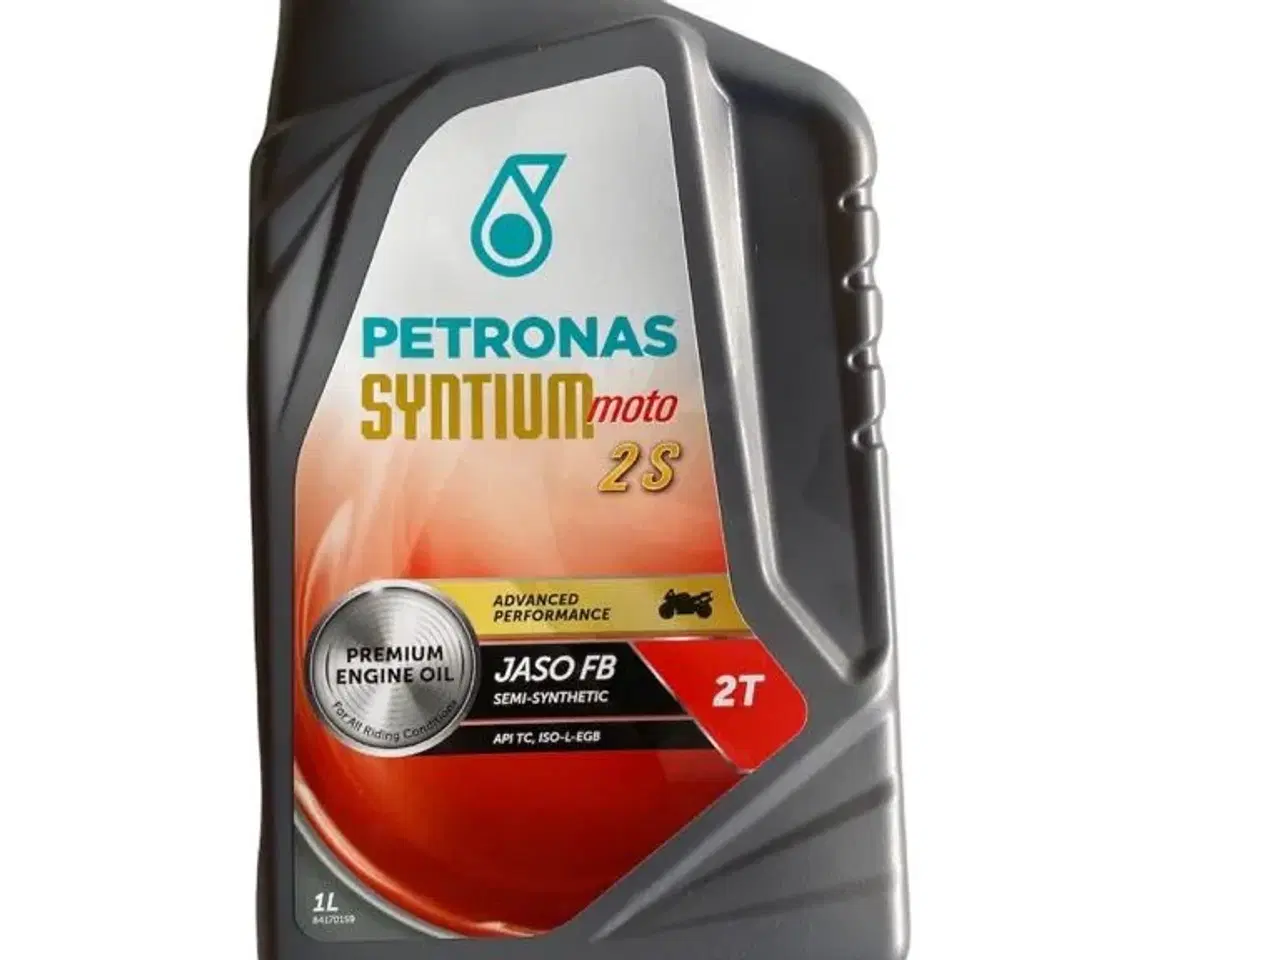 Billede 1 - Petronas motorolie Syntium Moto 2S 1L